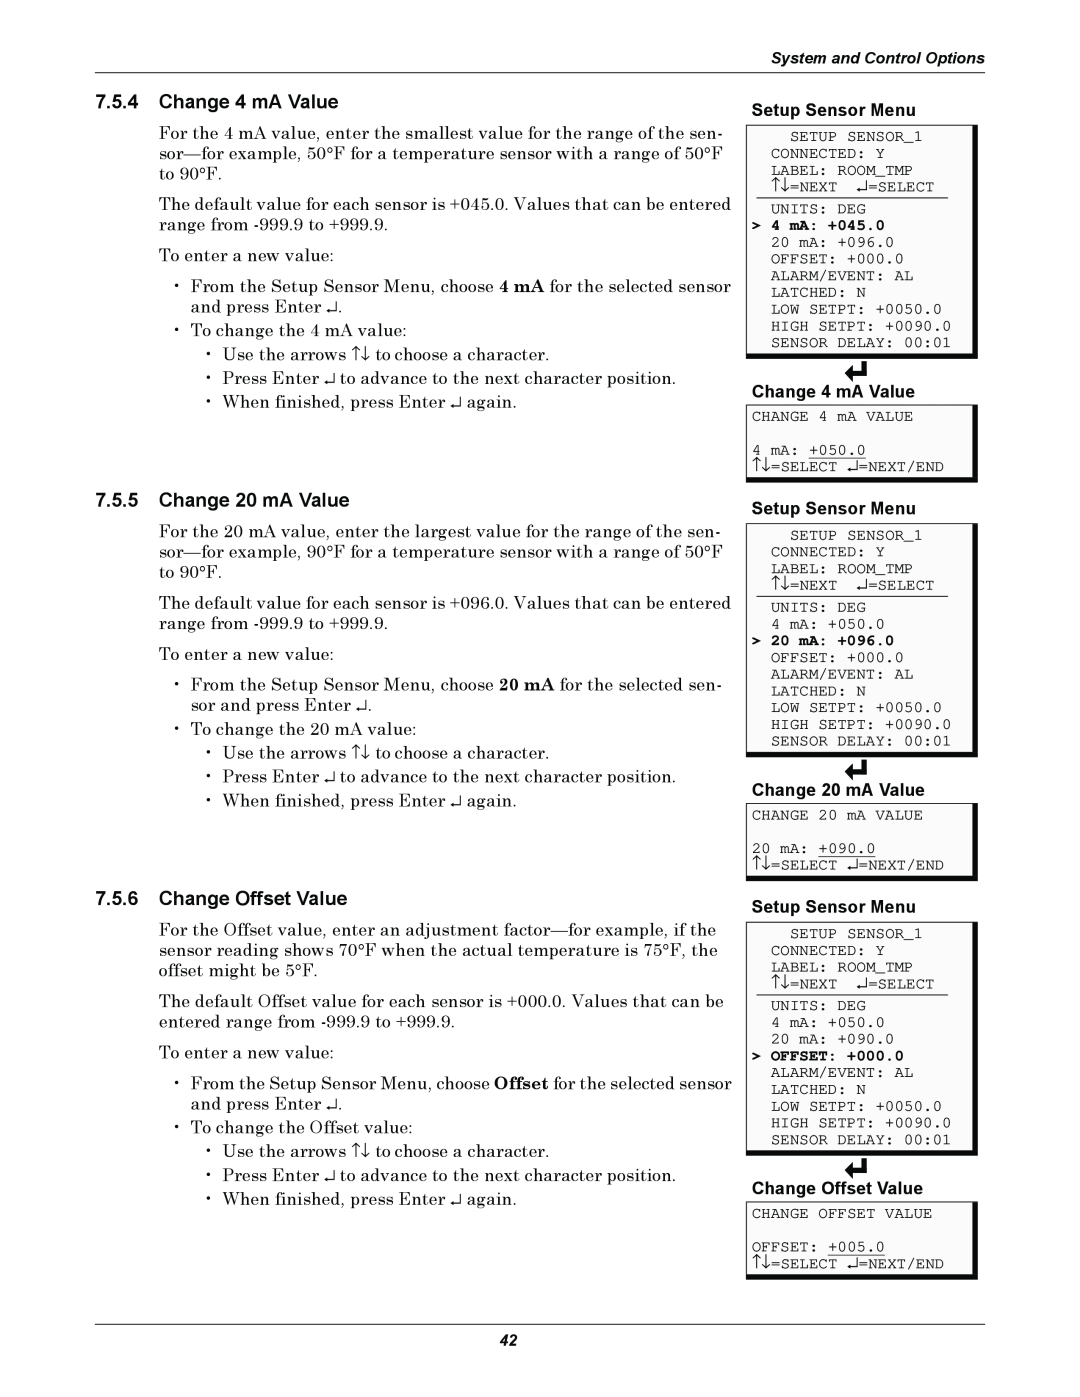 Emerson AC8 user manual 7.5.4Change 4 mA Value, 7.5.5Change 20 mA Value, 7.5.6Change Offset Value, Setup Sensor Menu 